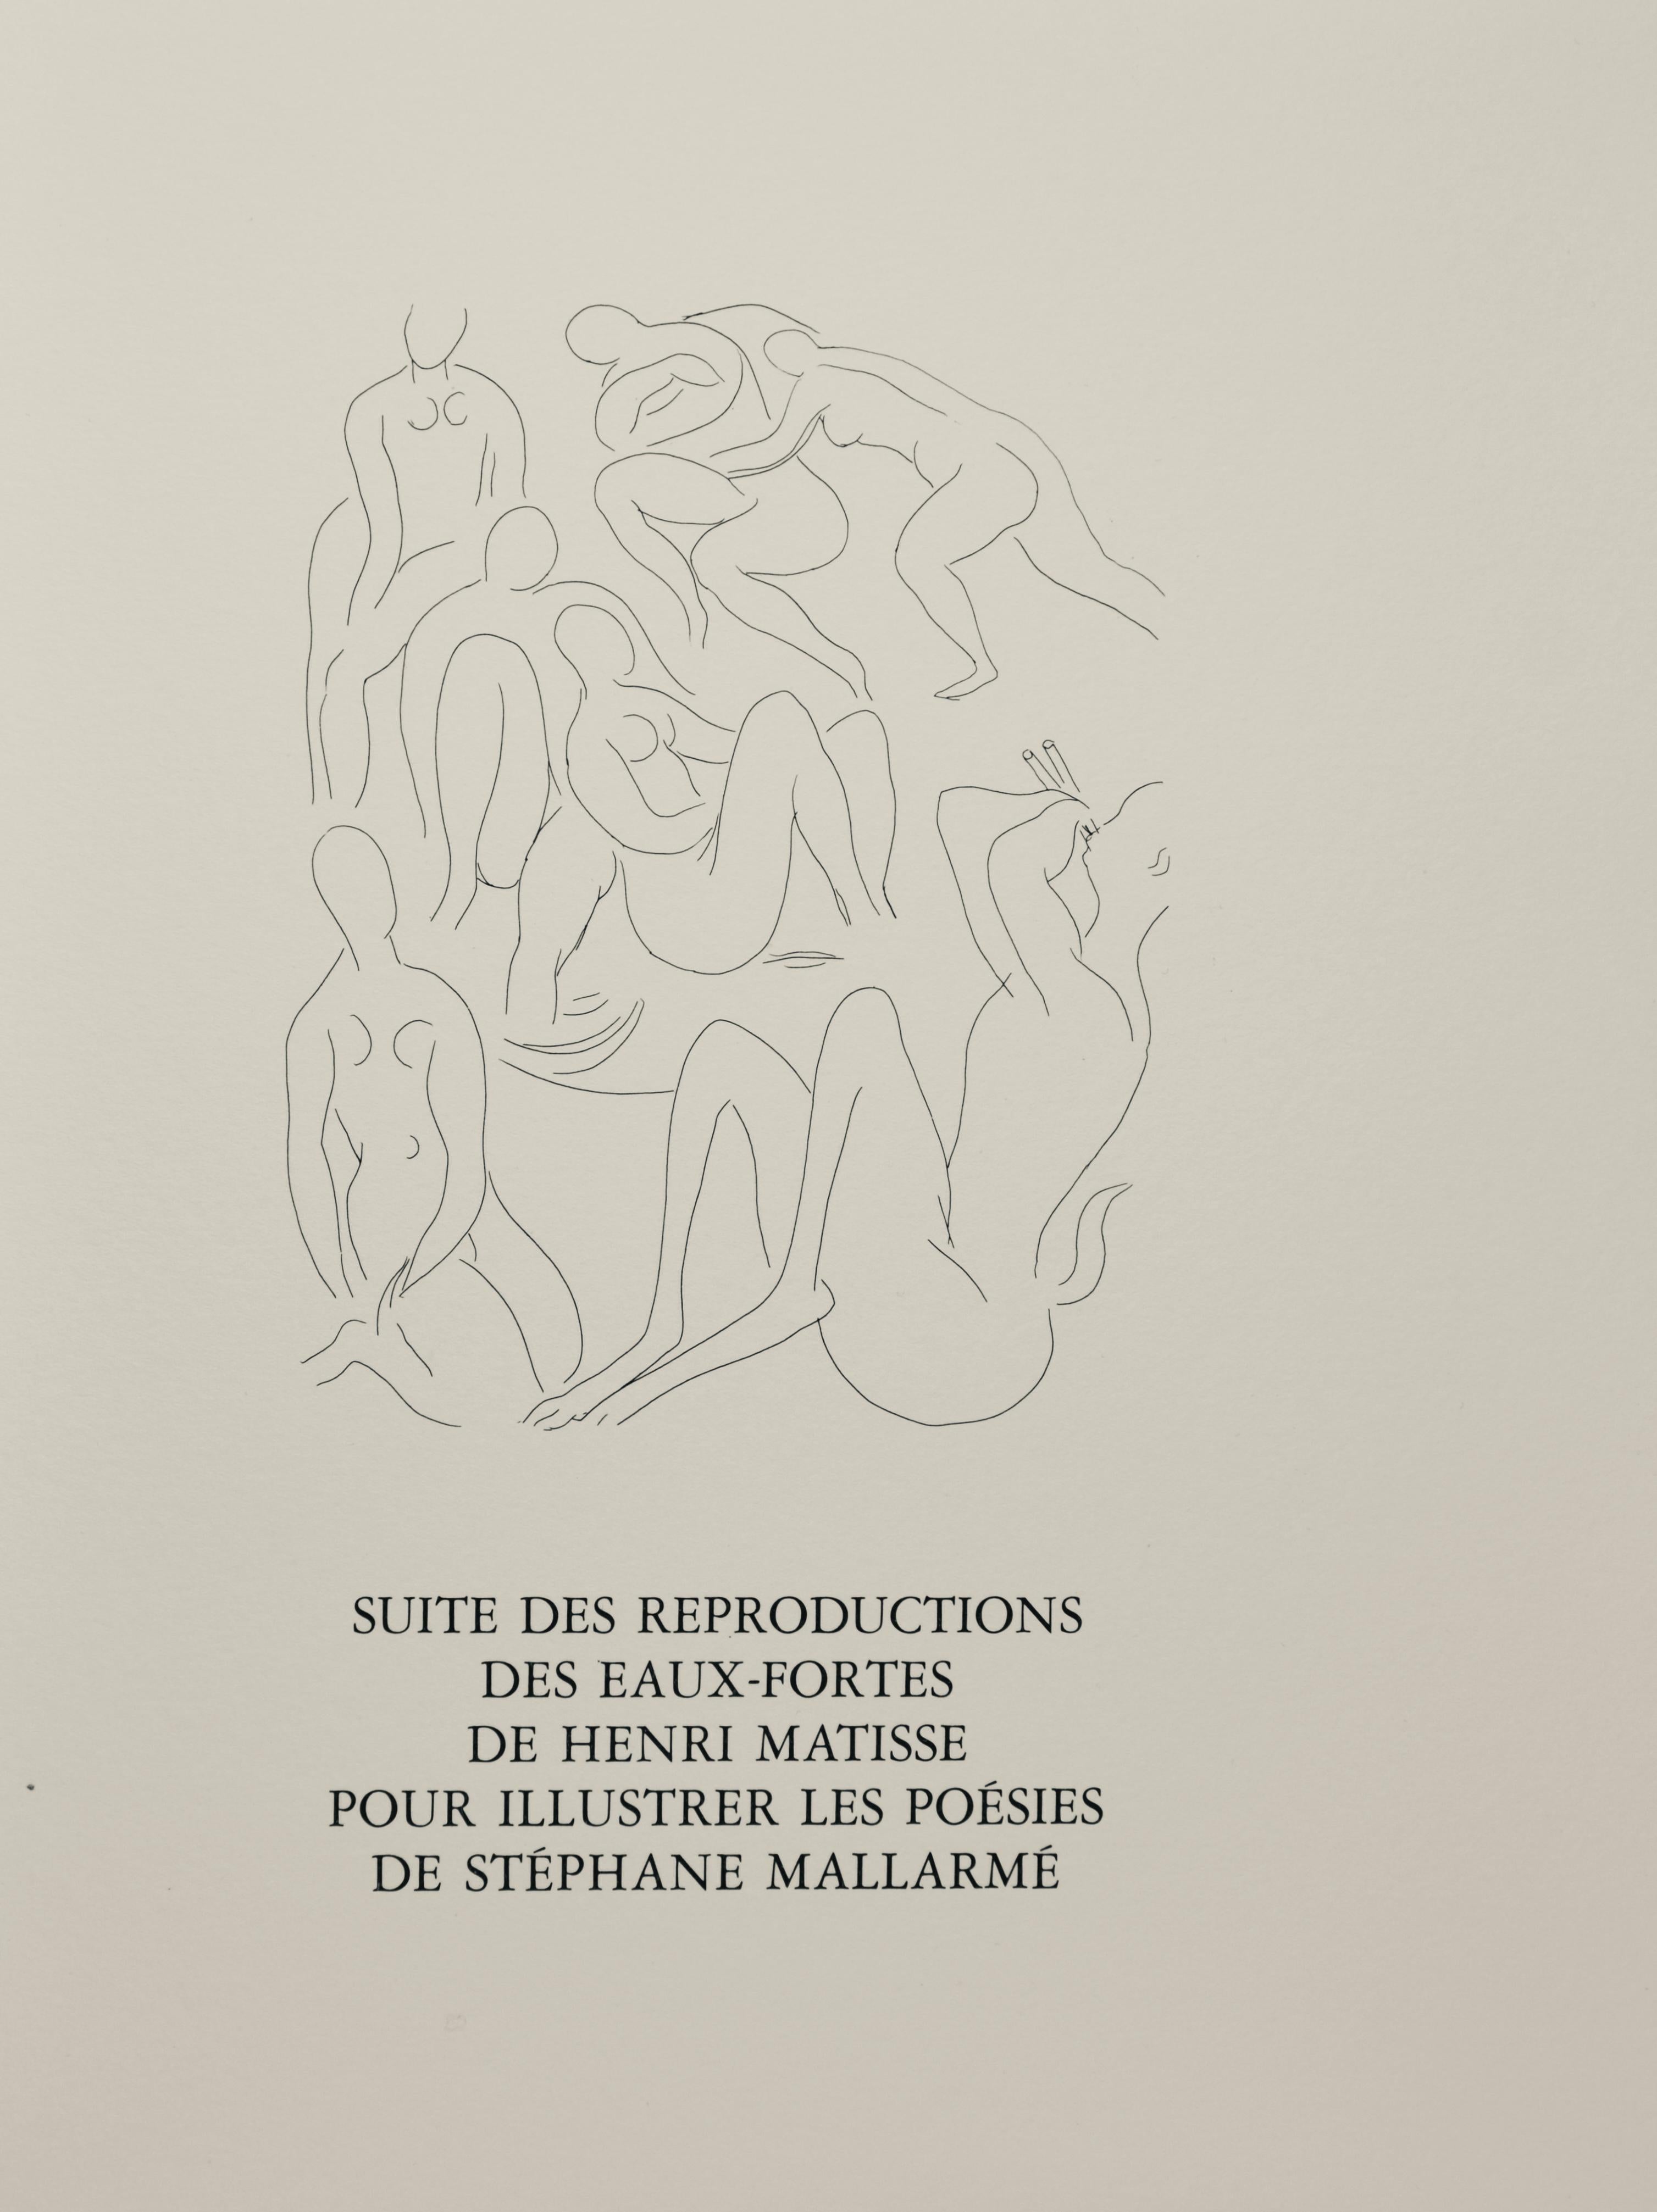 Matisse, La coiffure d'Hérodiade (Herodotus' Coiffure), Poésies (after) For Sale 2